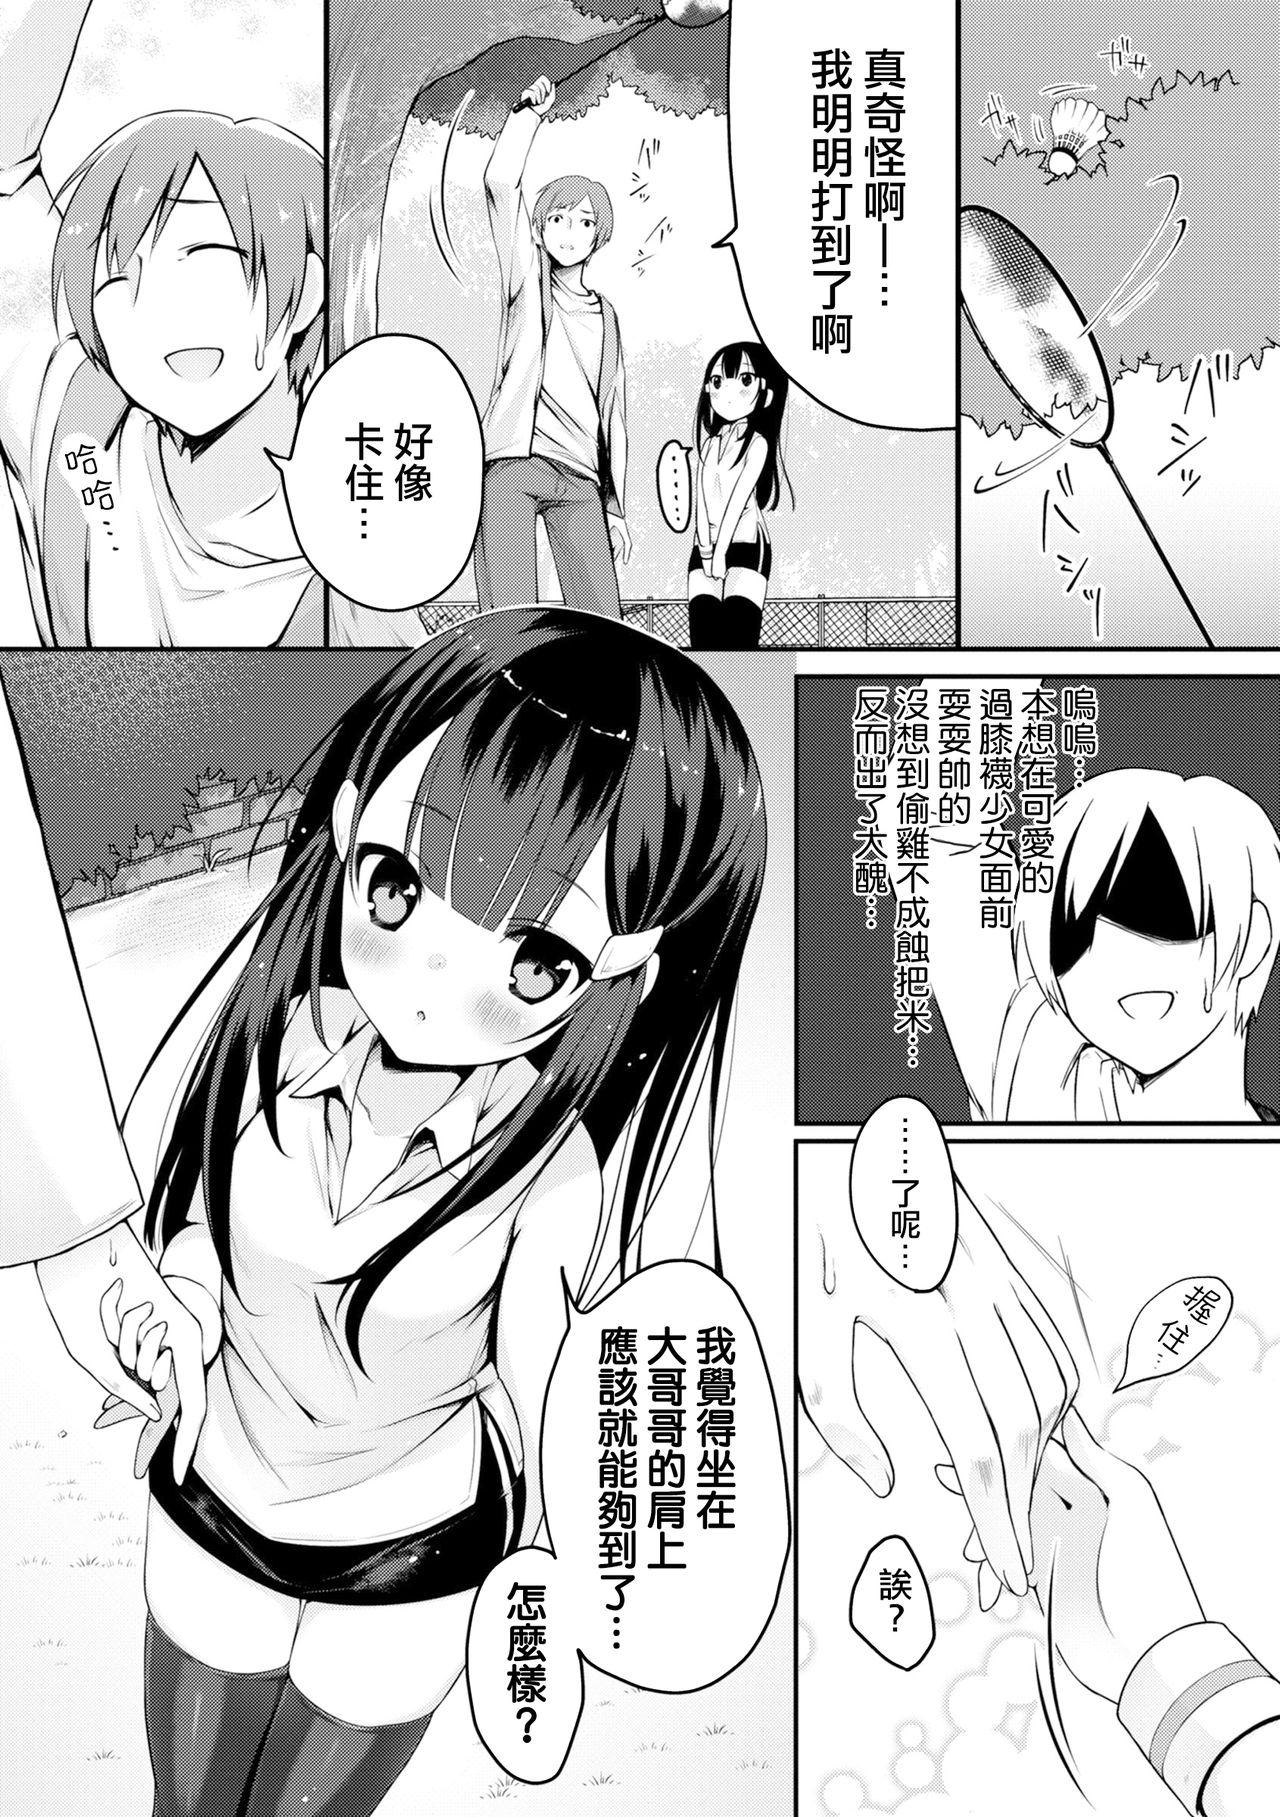 Classy Kataguruma x Shoujo Humiliation Pov - Page 3